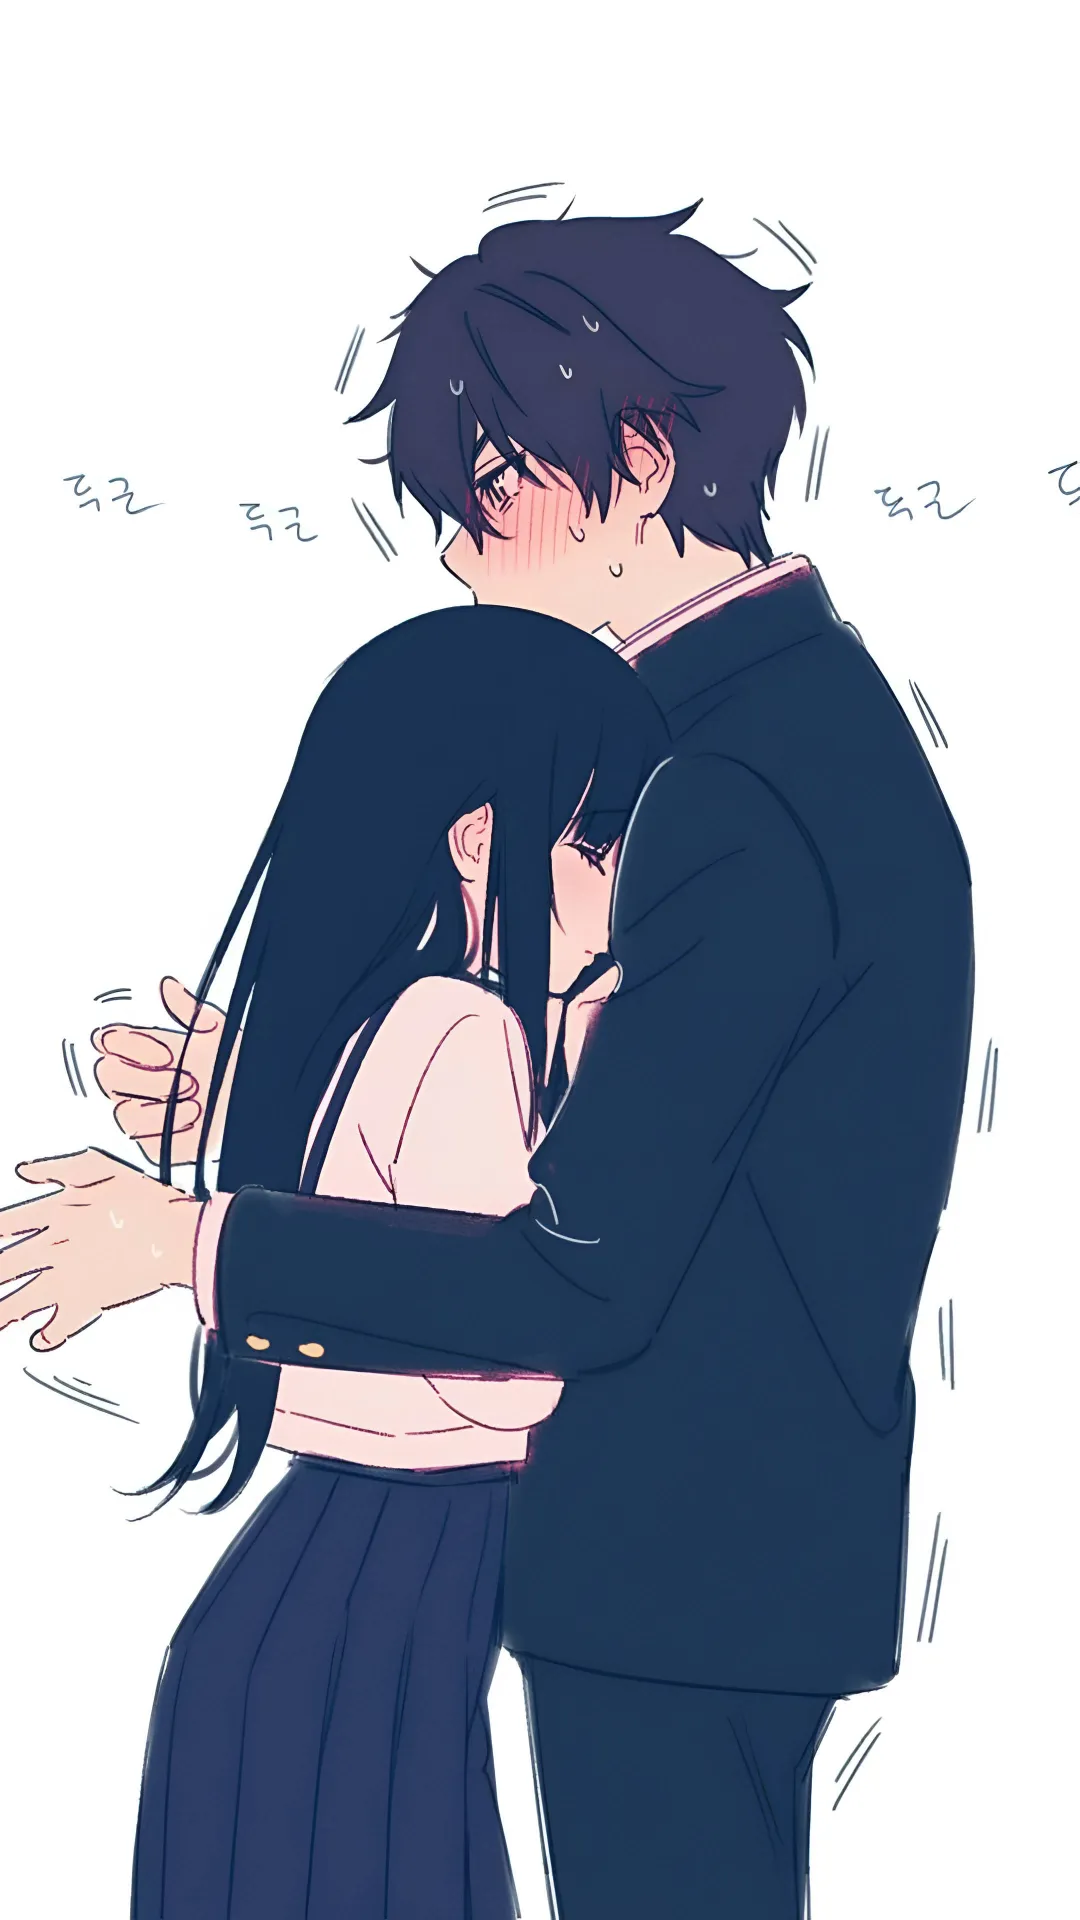 thumb for Cute Anime Hugging Wallpaper